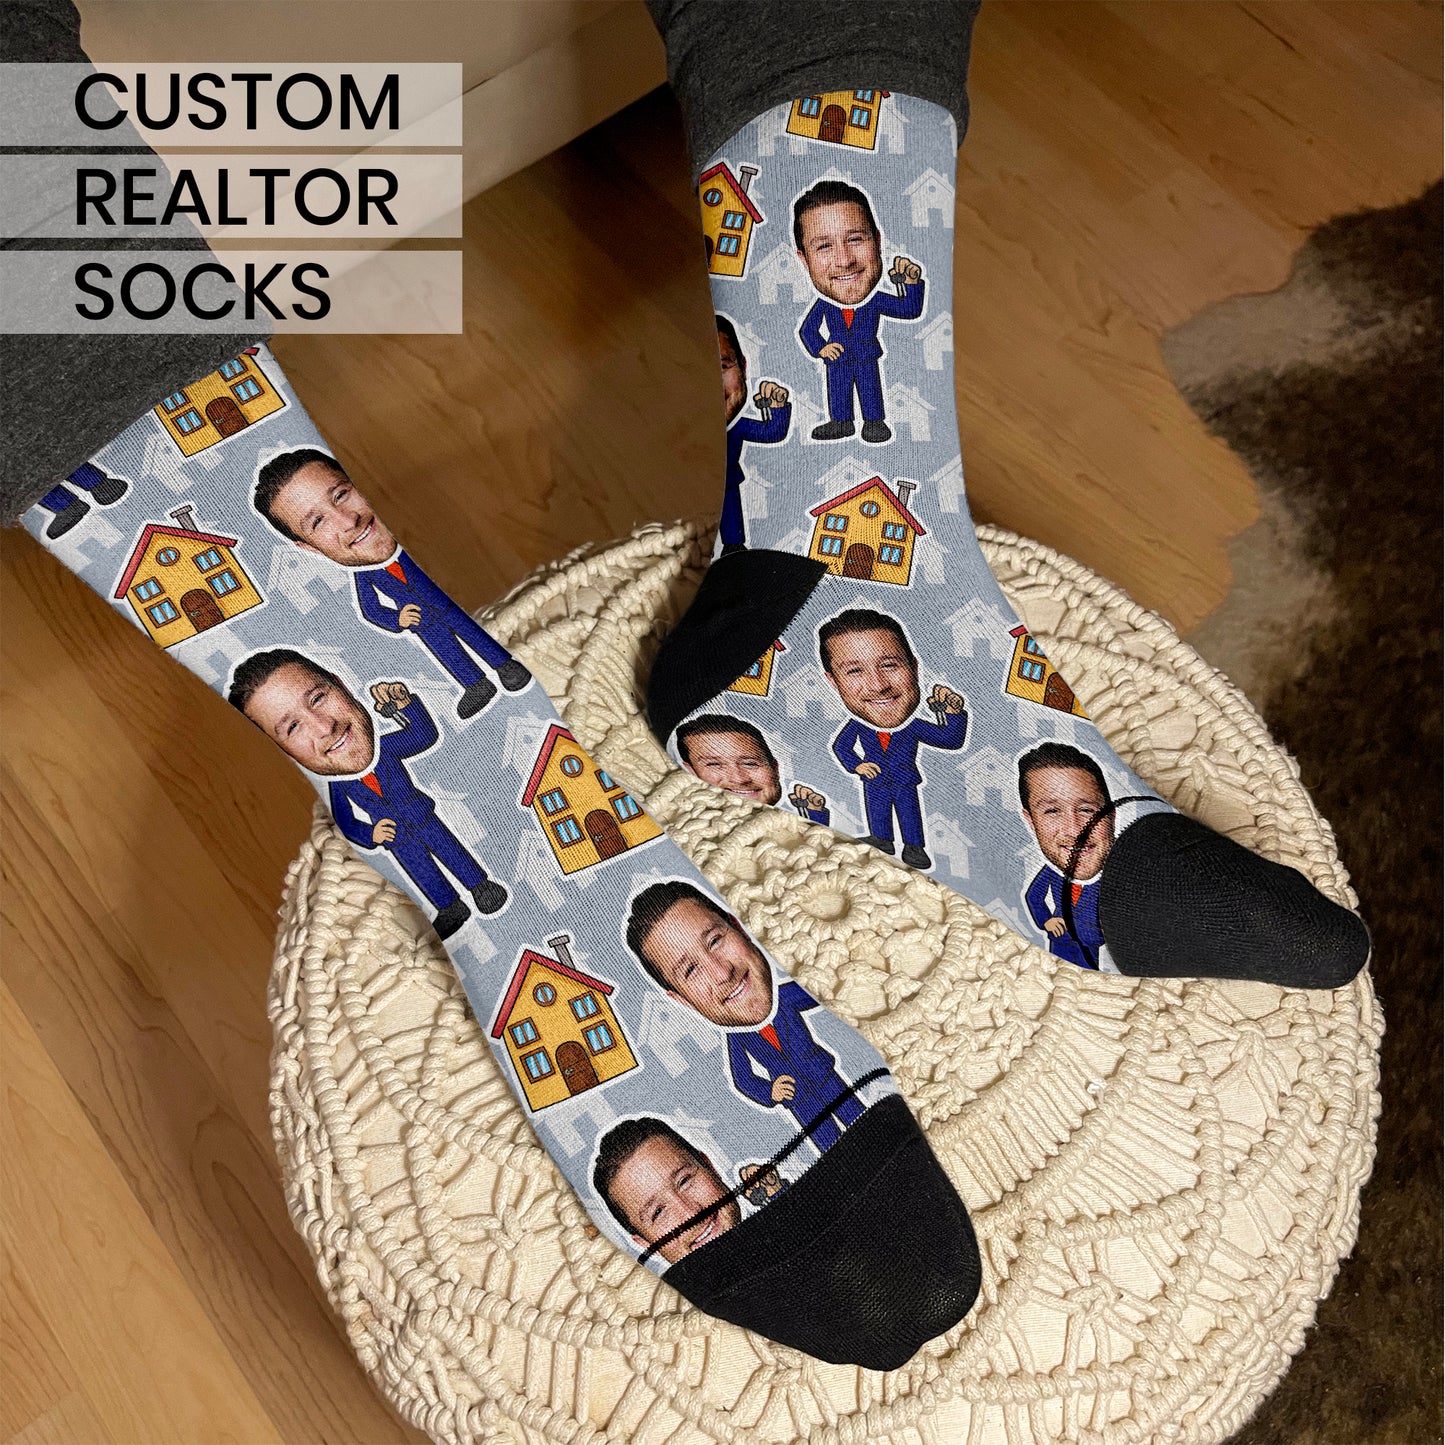 Realtor Gift Custom Face Socks